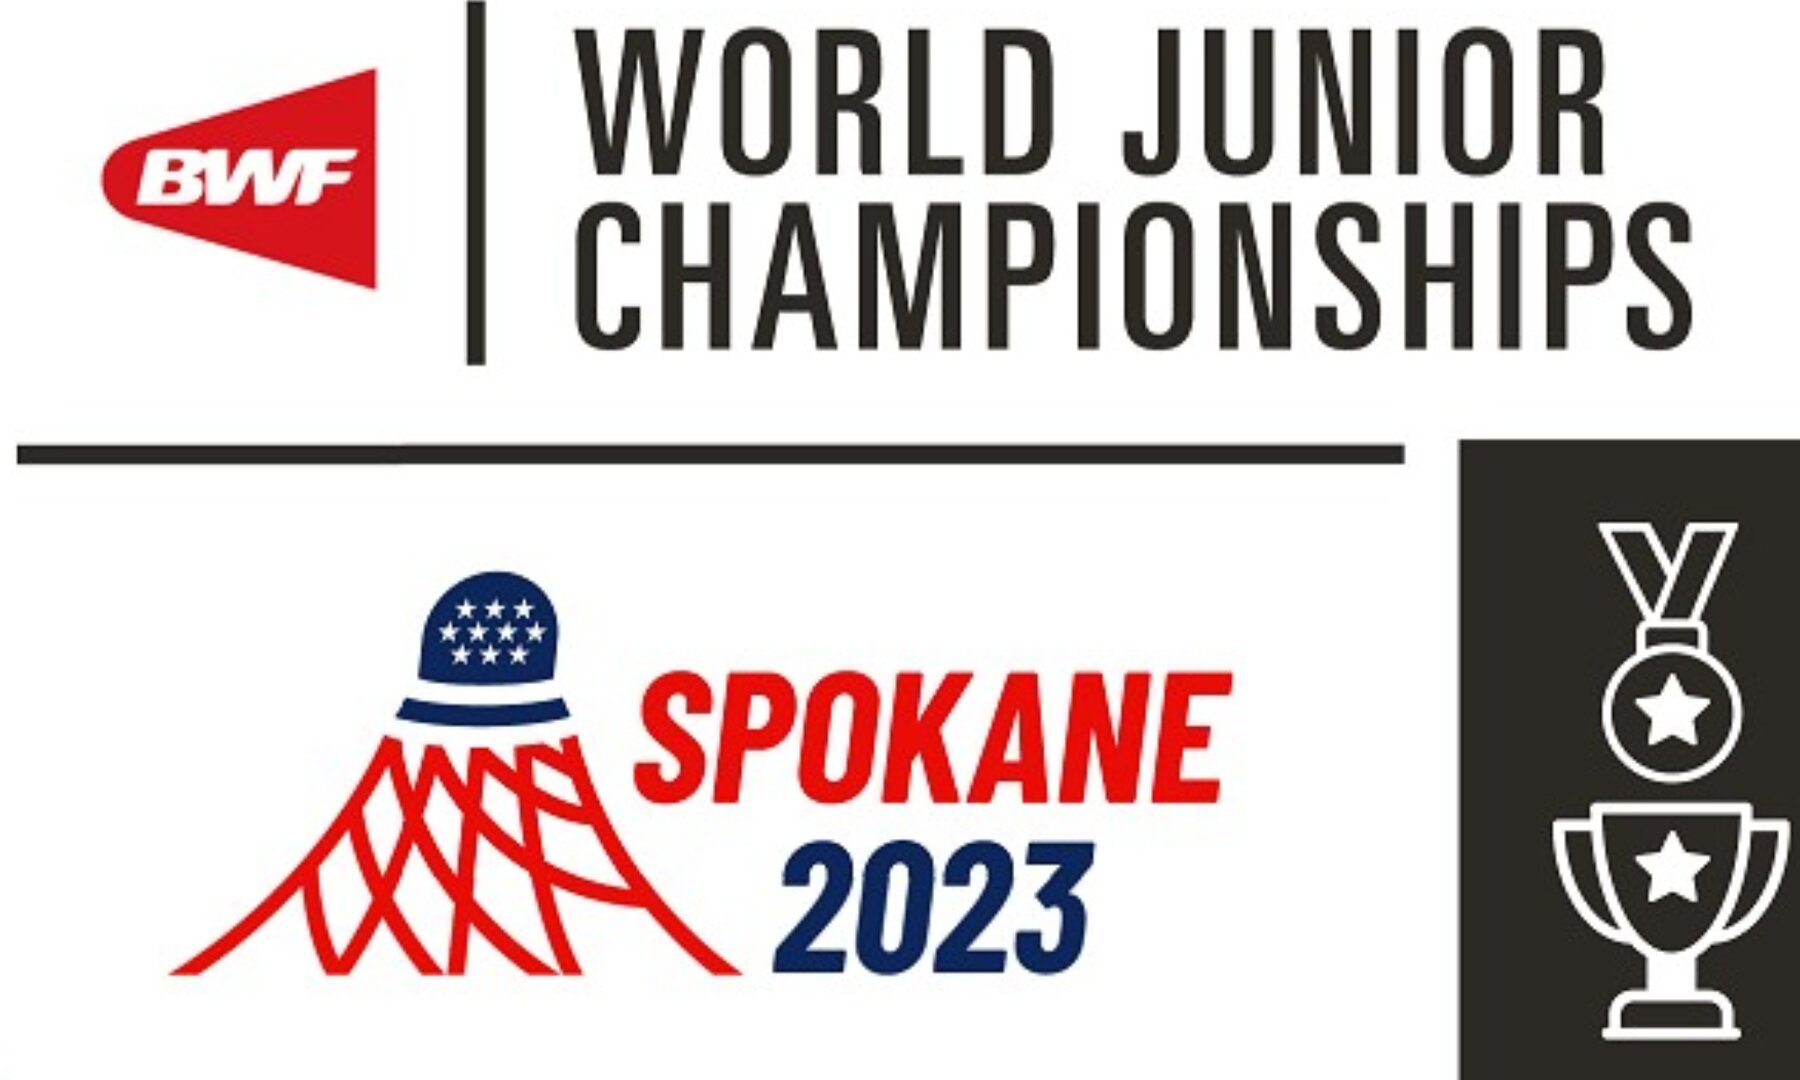 bwf world junior championships